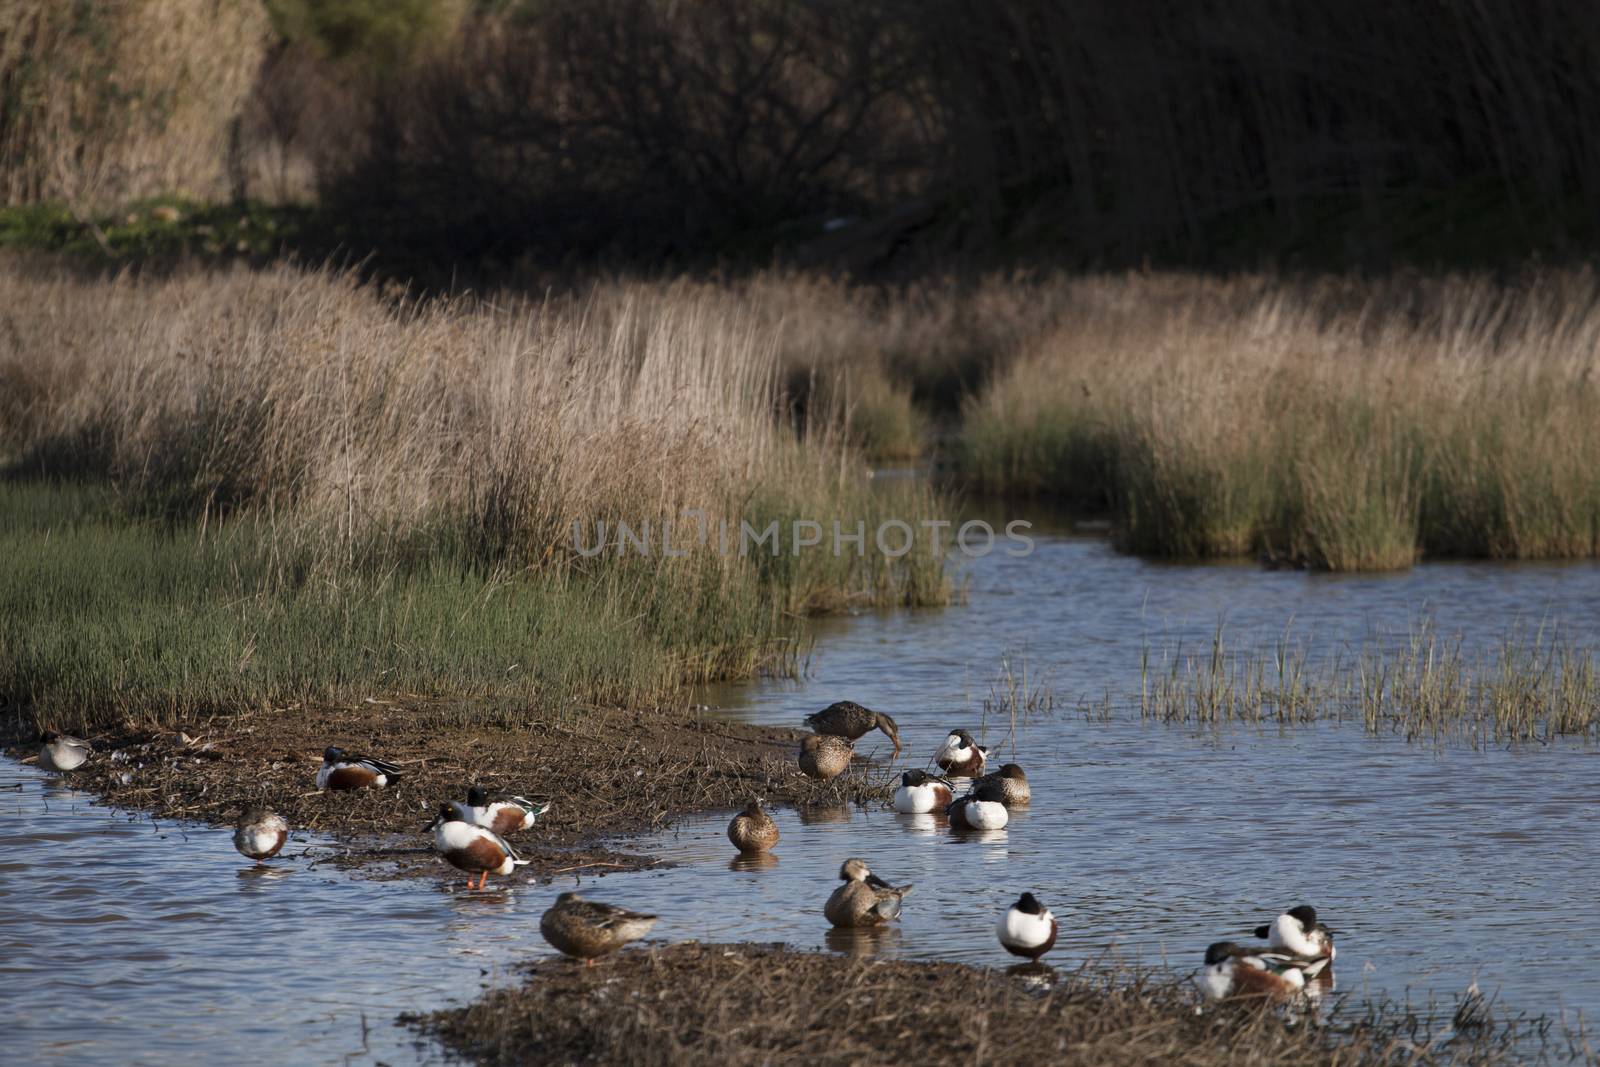 View of several ducks in the marshlands of Quarteira region, Algarve, Portugal.